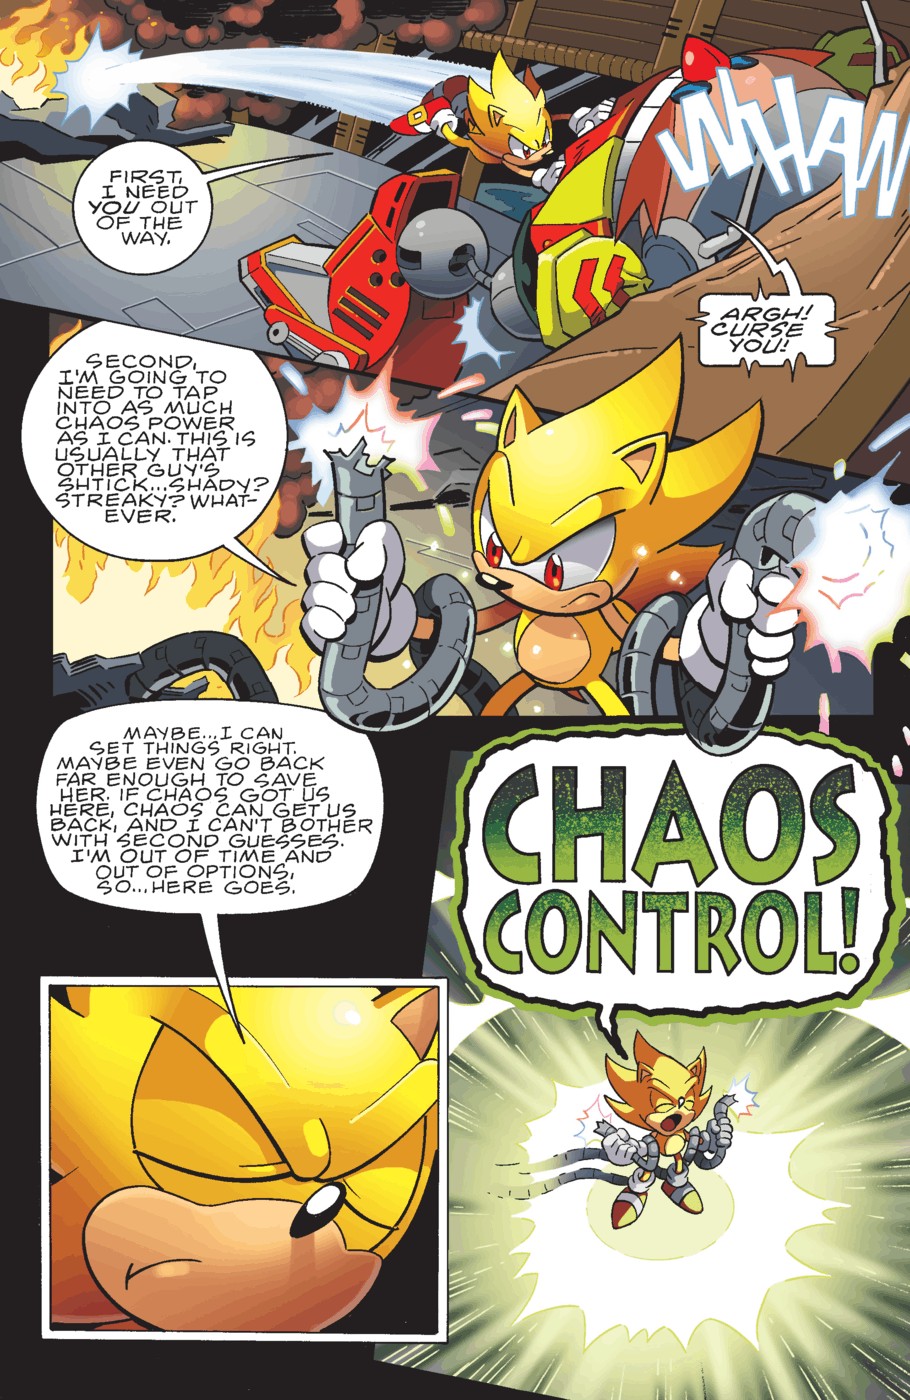 sonic adventure 3 chaos control